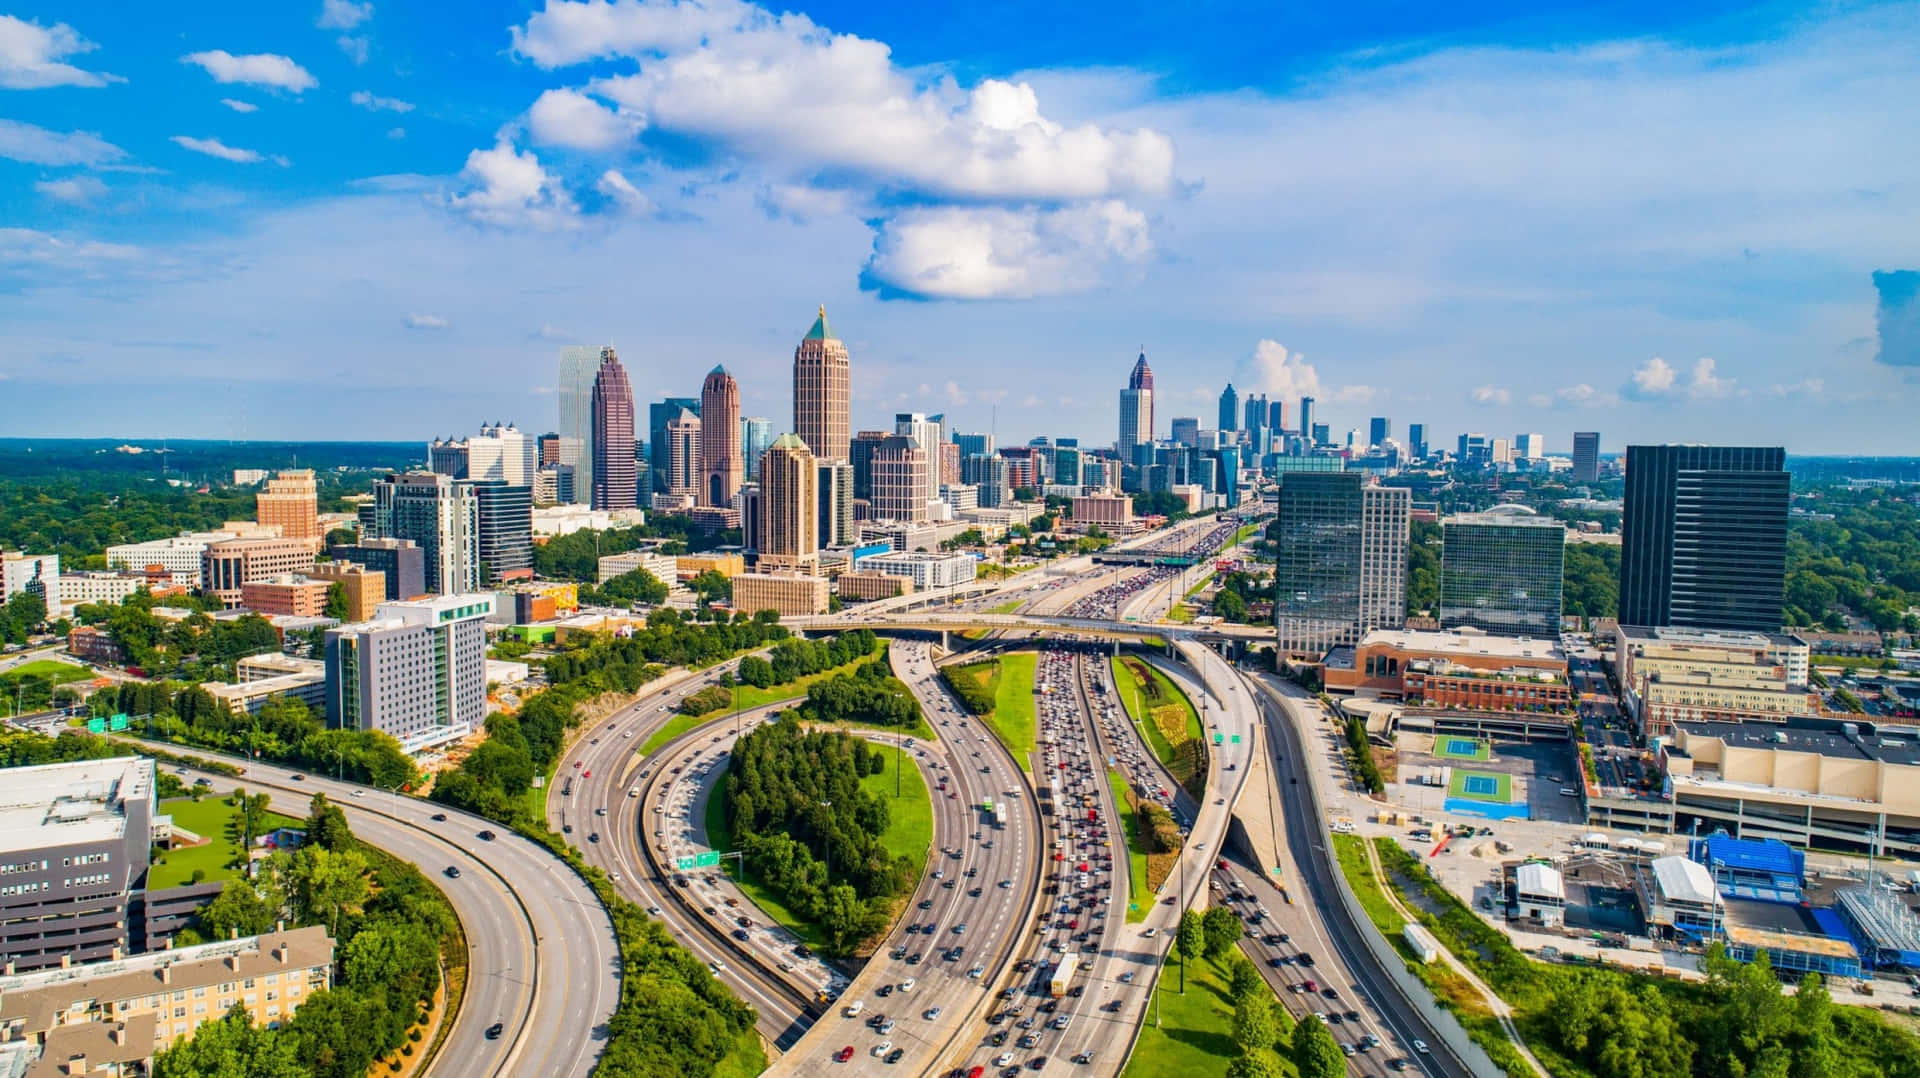 Atlanta Skyline With Highways And Buildings